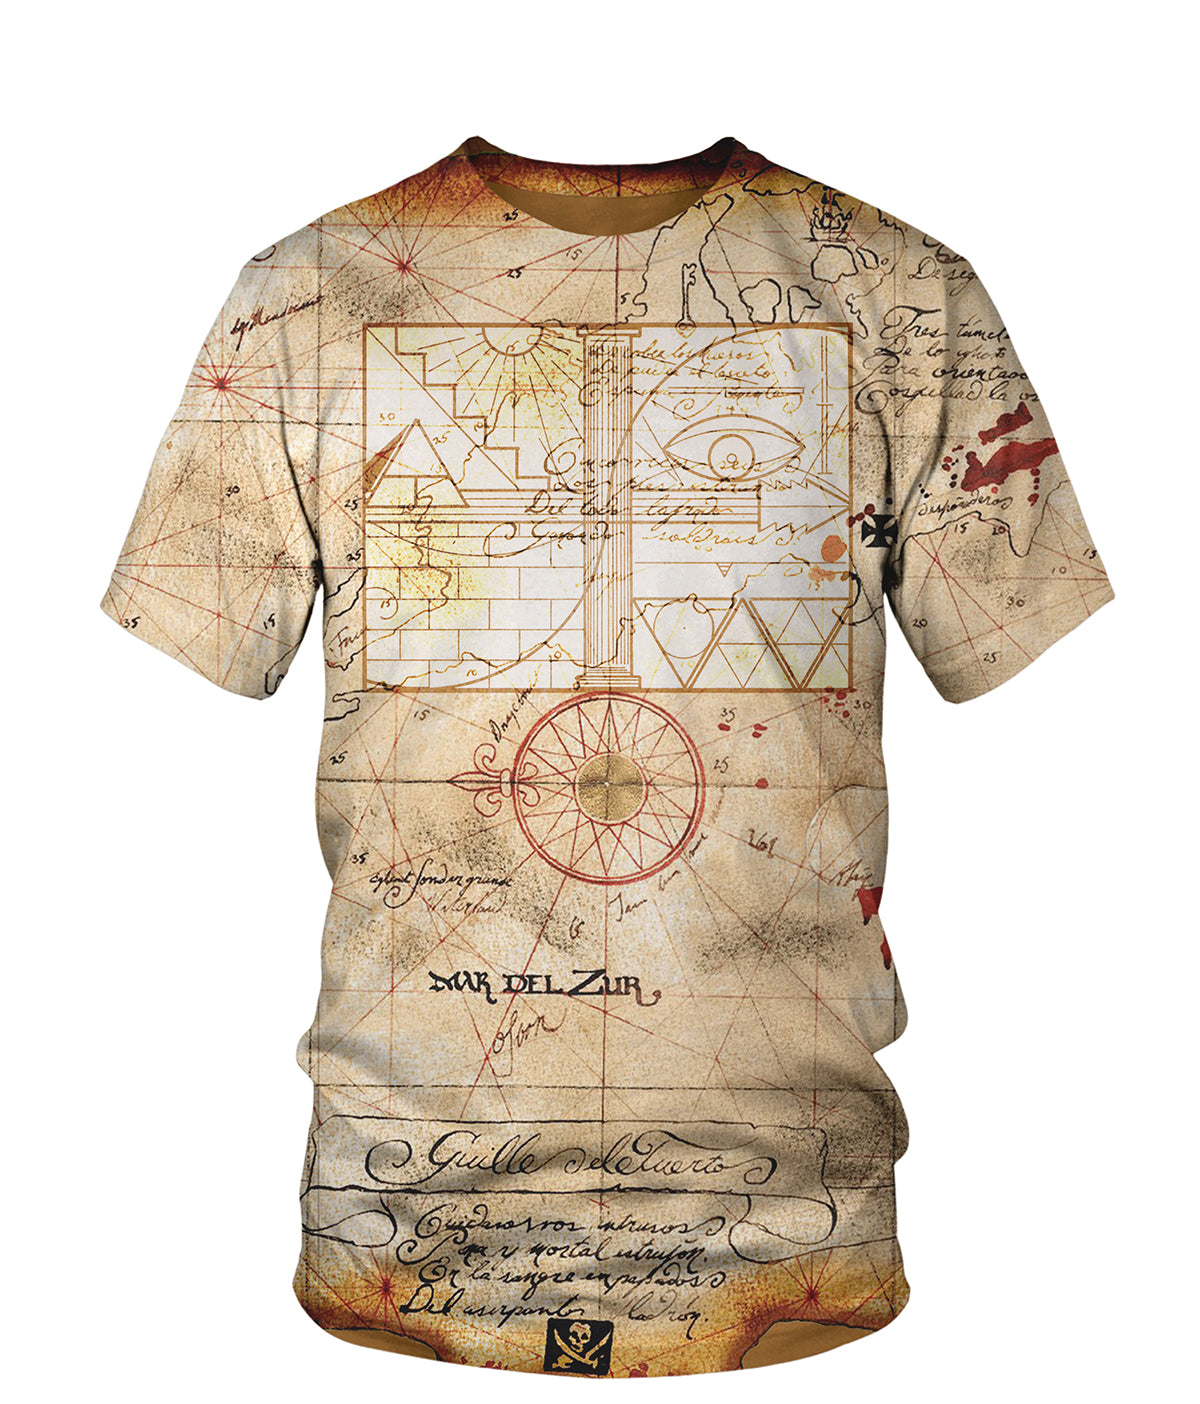 Treasure Map, Treasure Hunt, Pirate Treasure, Blackbeard, Adventure, Secret, Mystery T Shirt - VECHTR001